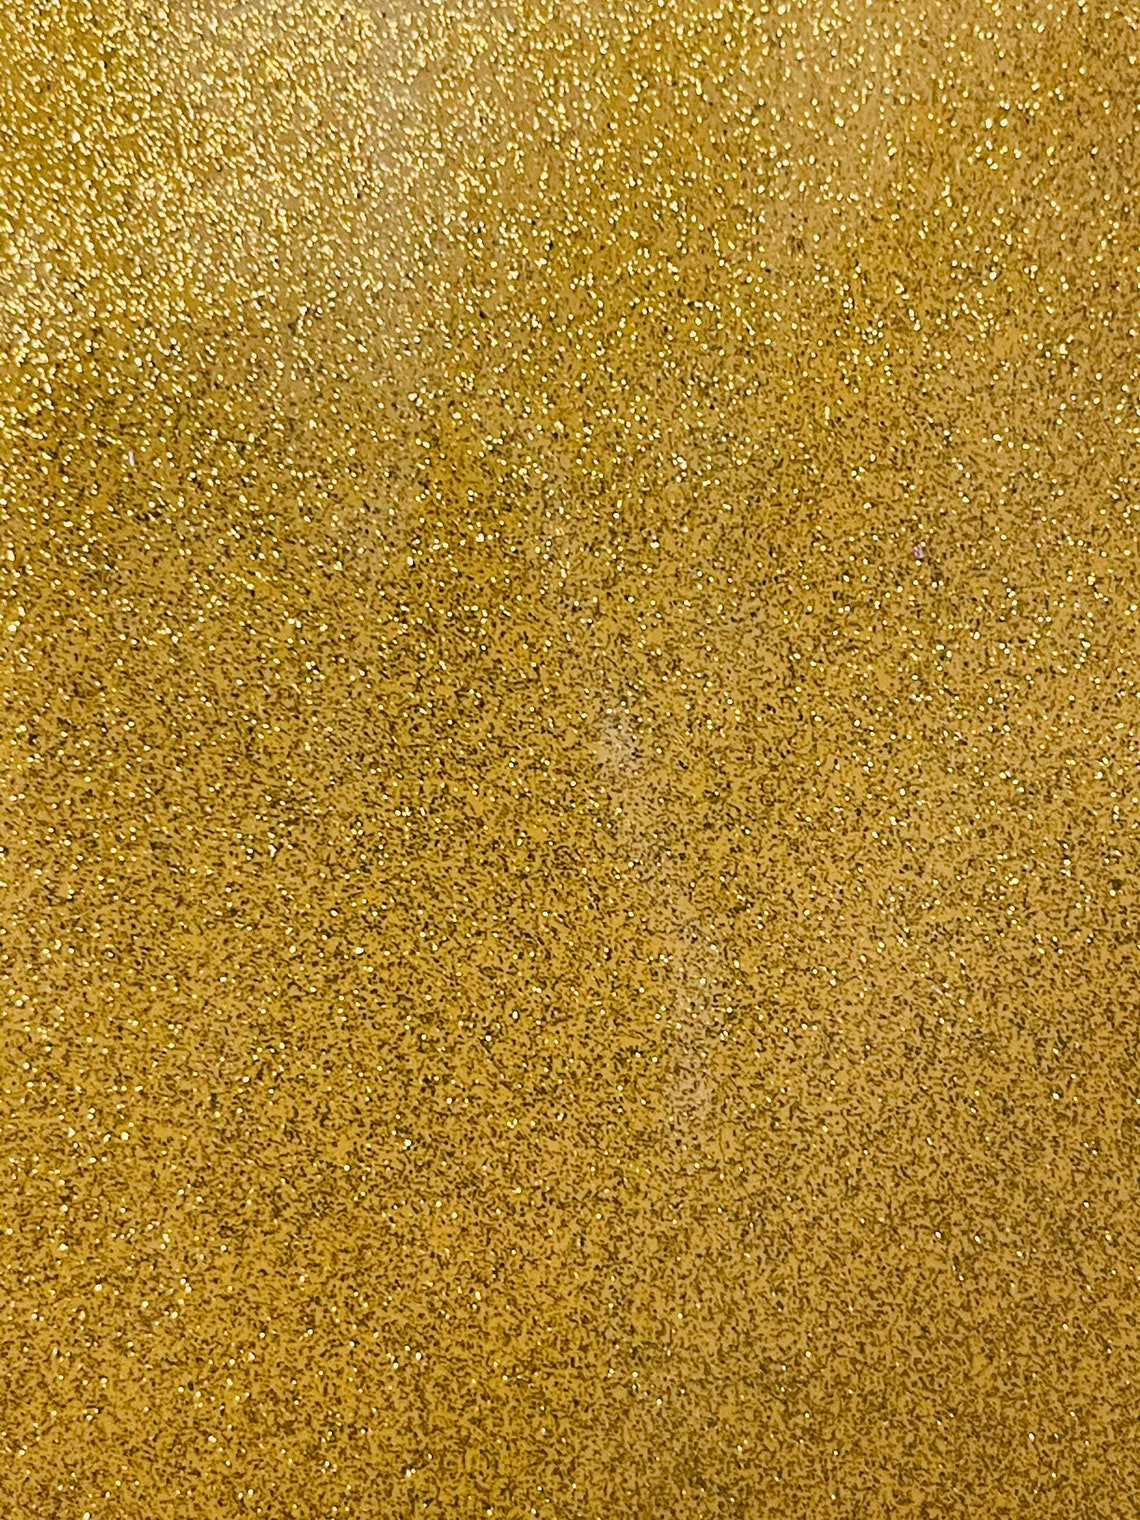 Gold Metallic Vinyl Faux Fake Leather Sparkle Glitter Fabric Etsy